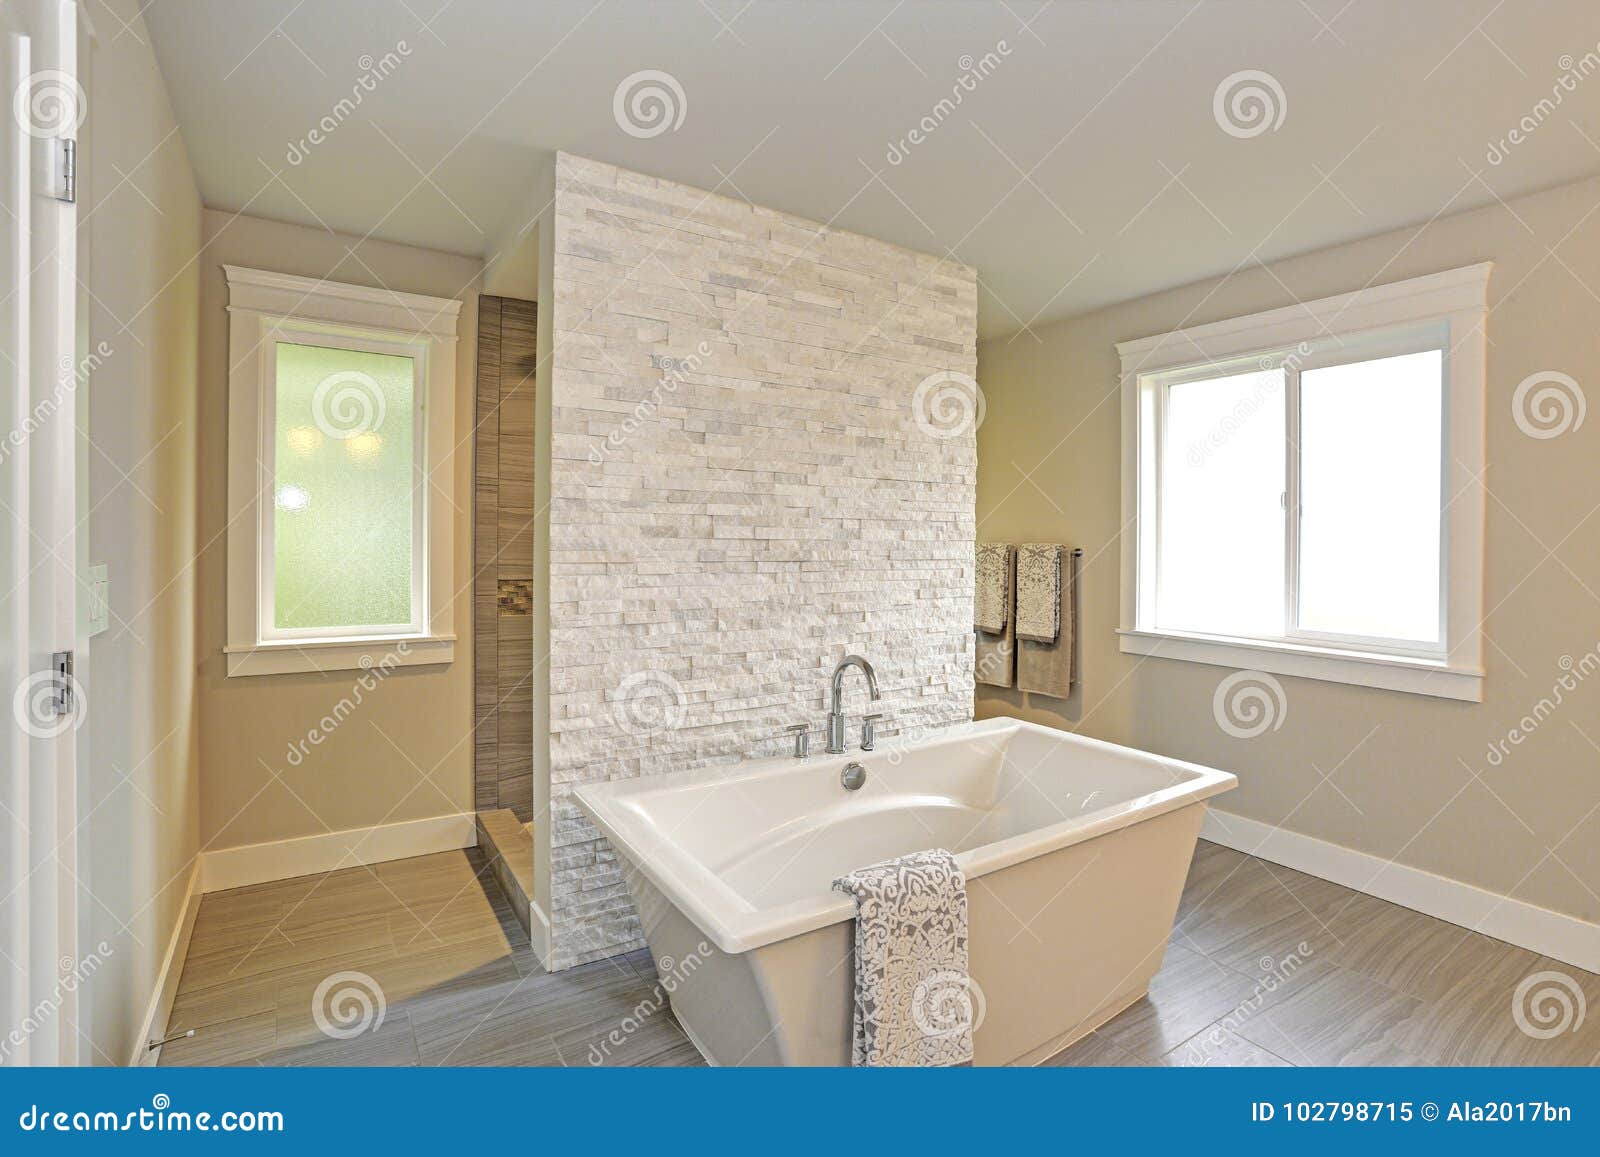 amazing master bathroom with a freestanding bathtub